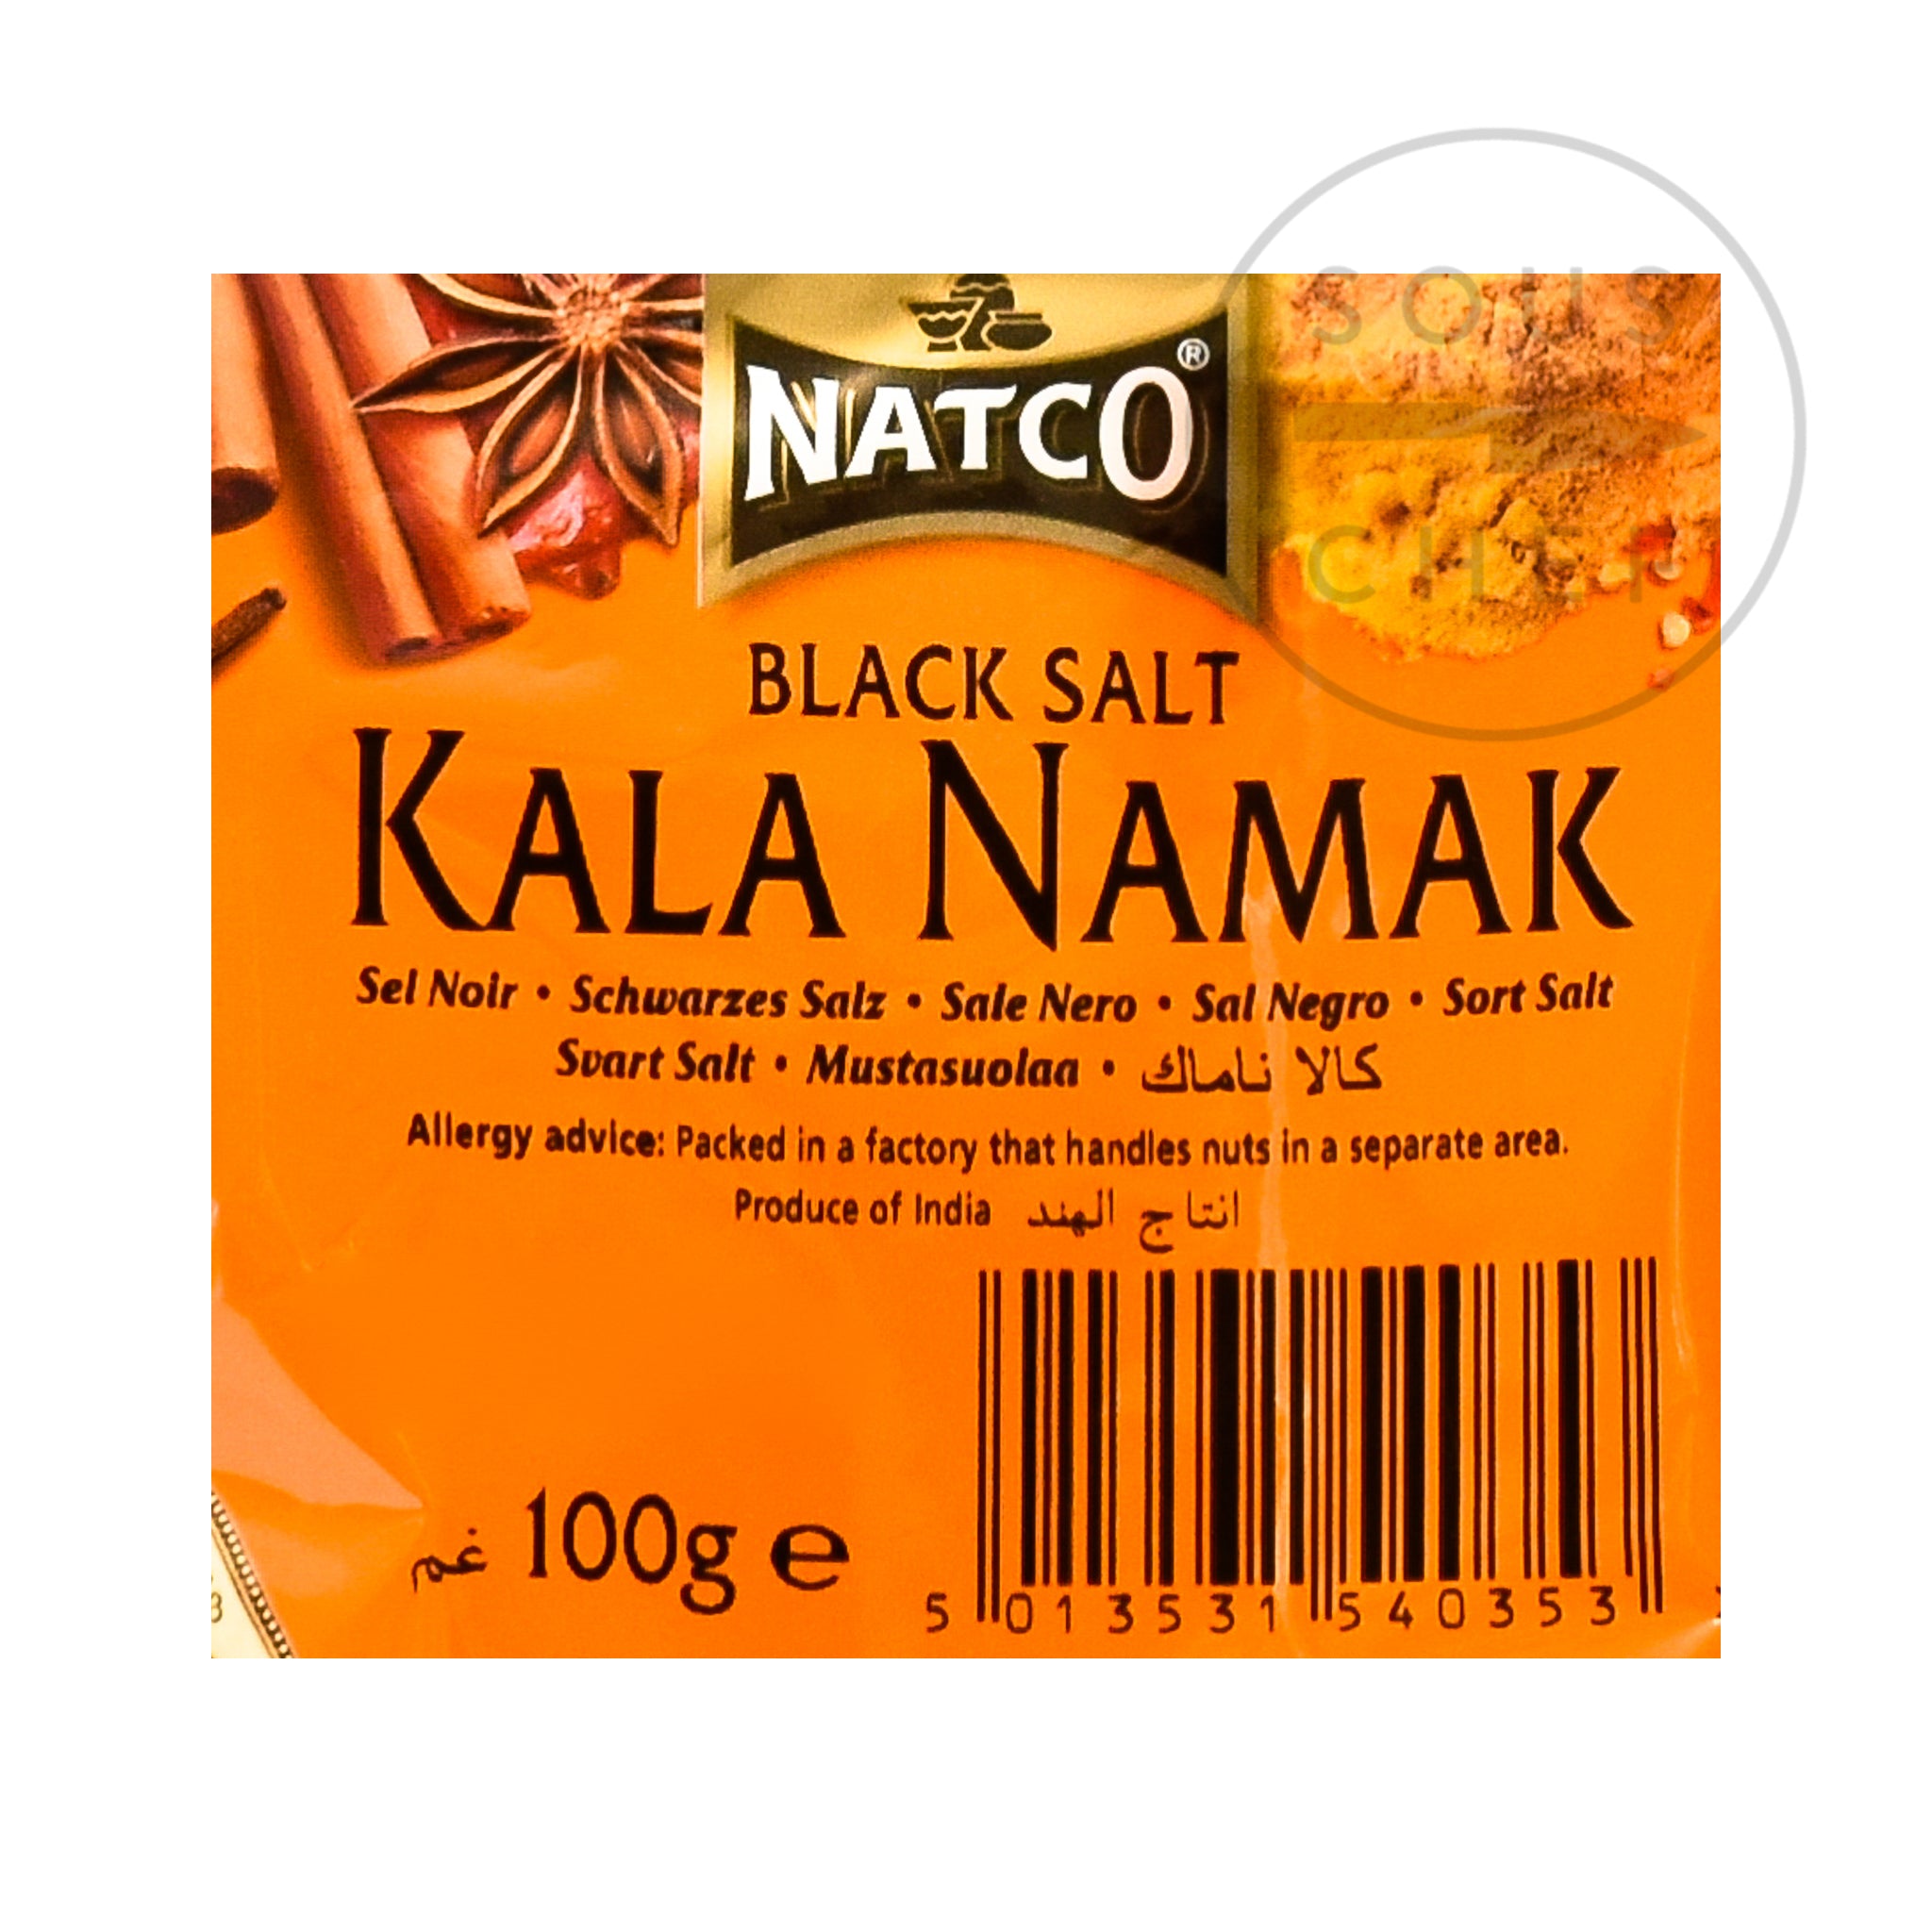 Kala Namak - Indian Black Salt, 100g